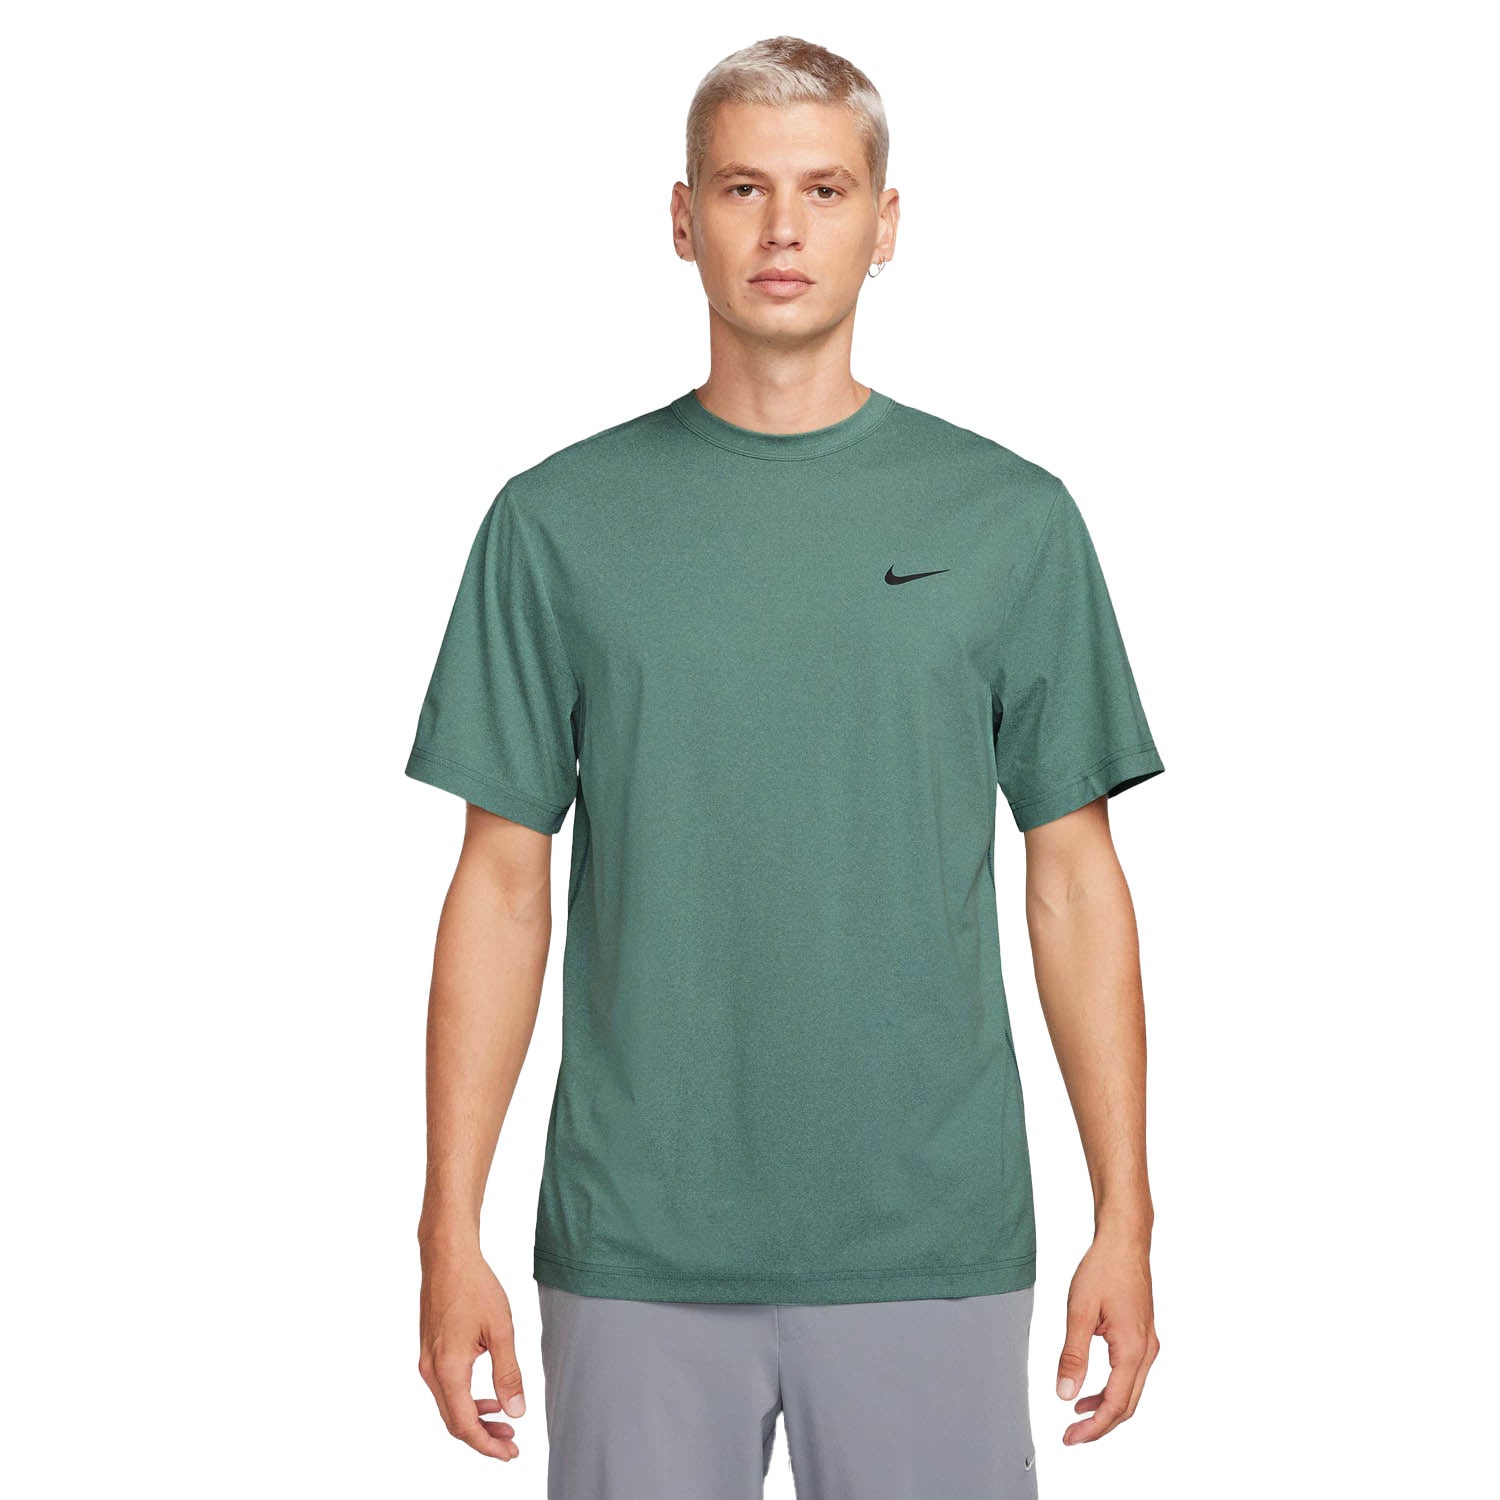 Nike Hyverse Short Sleeve